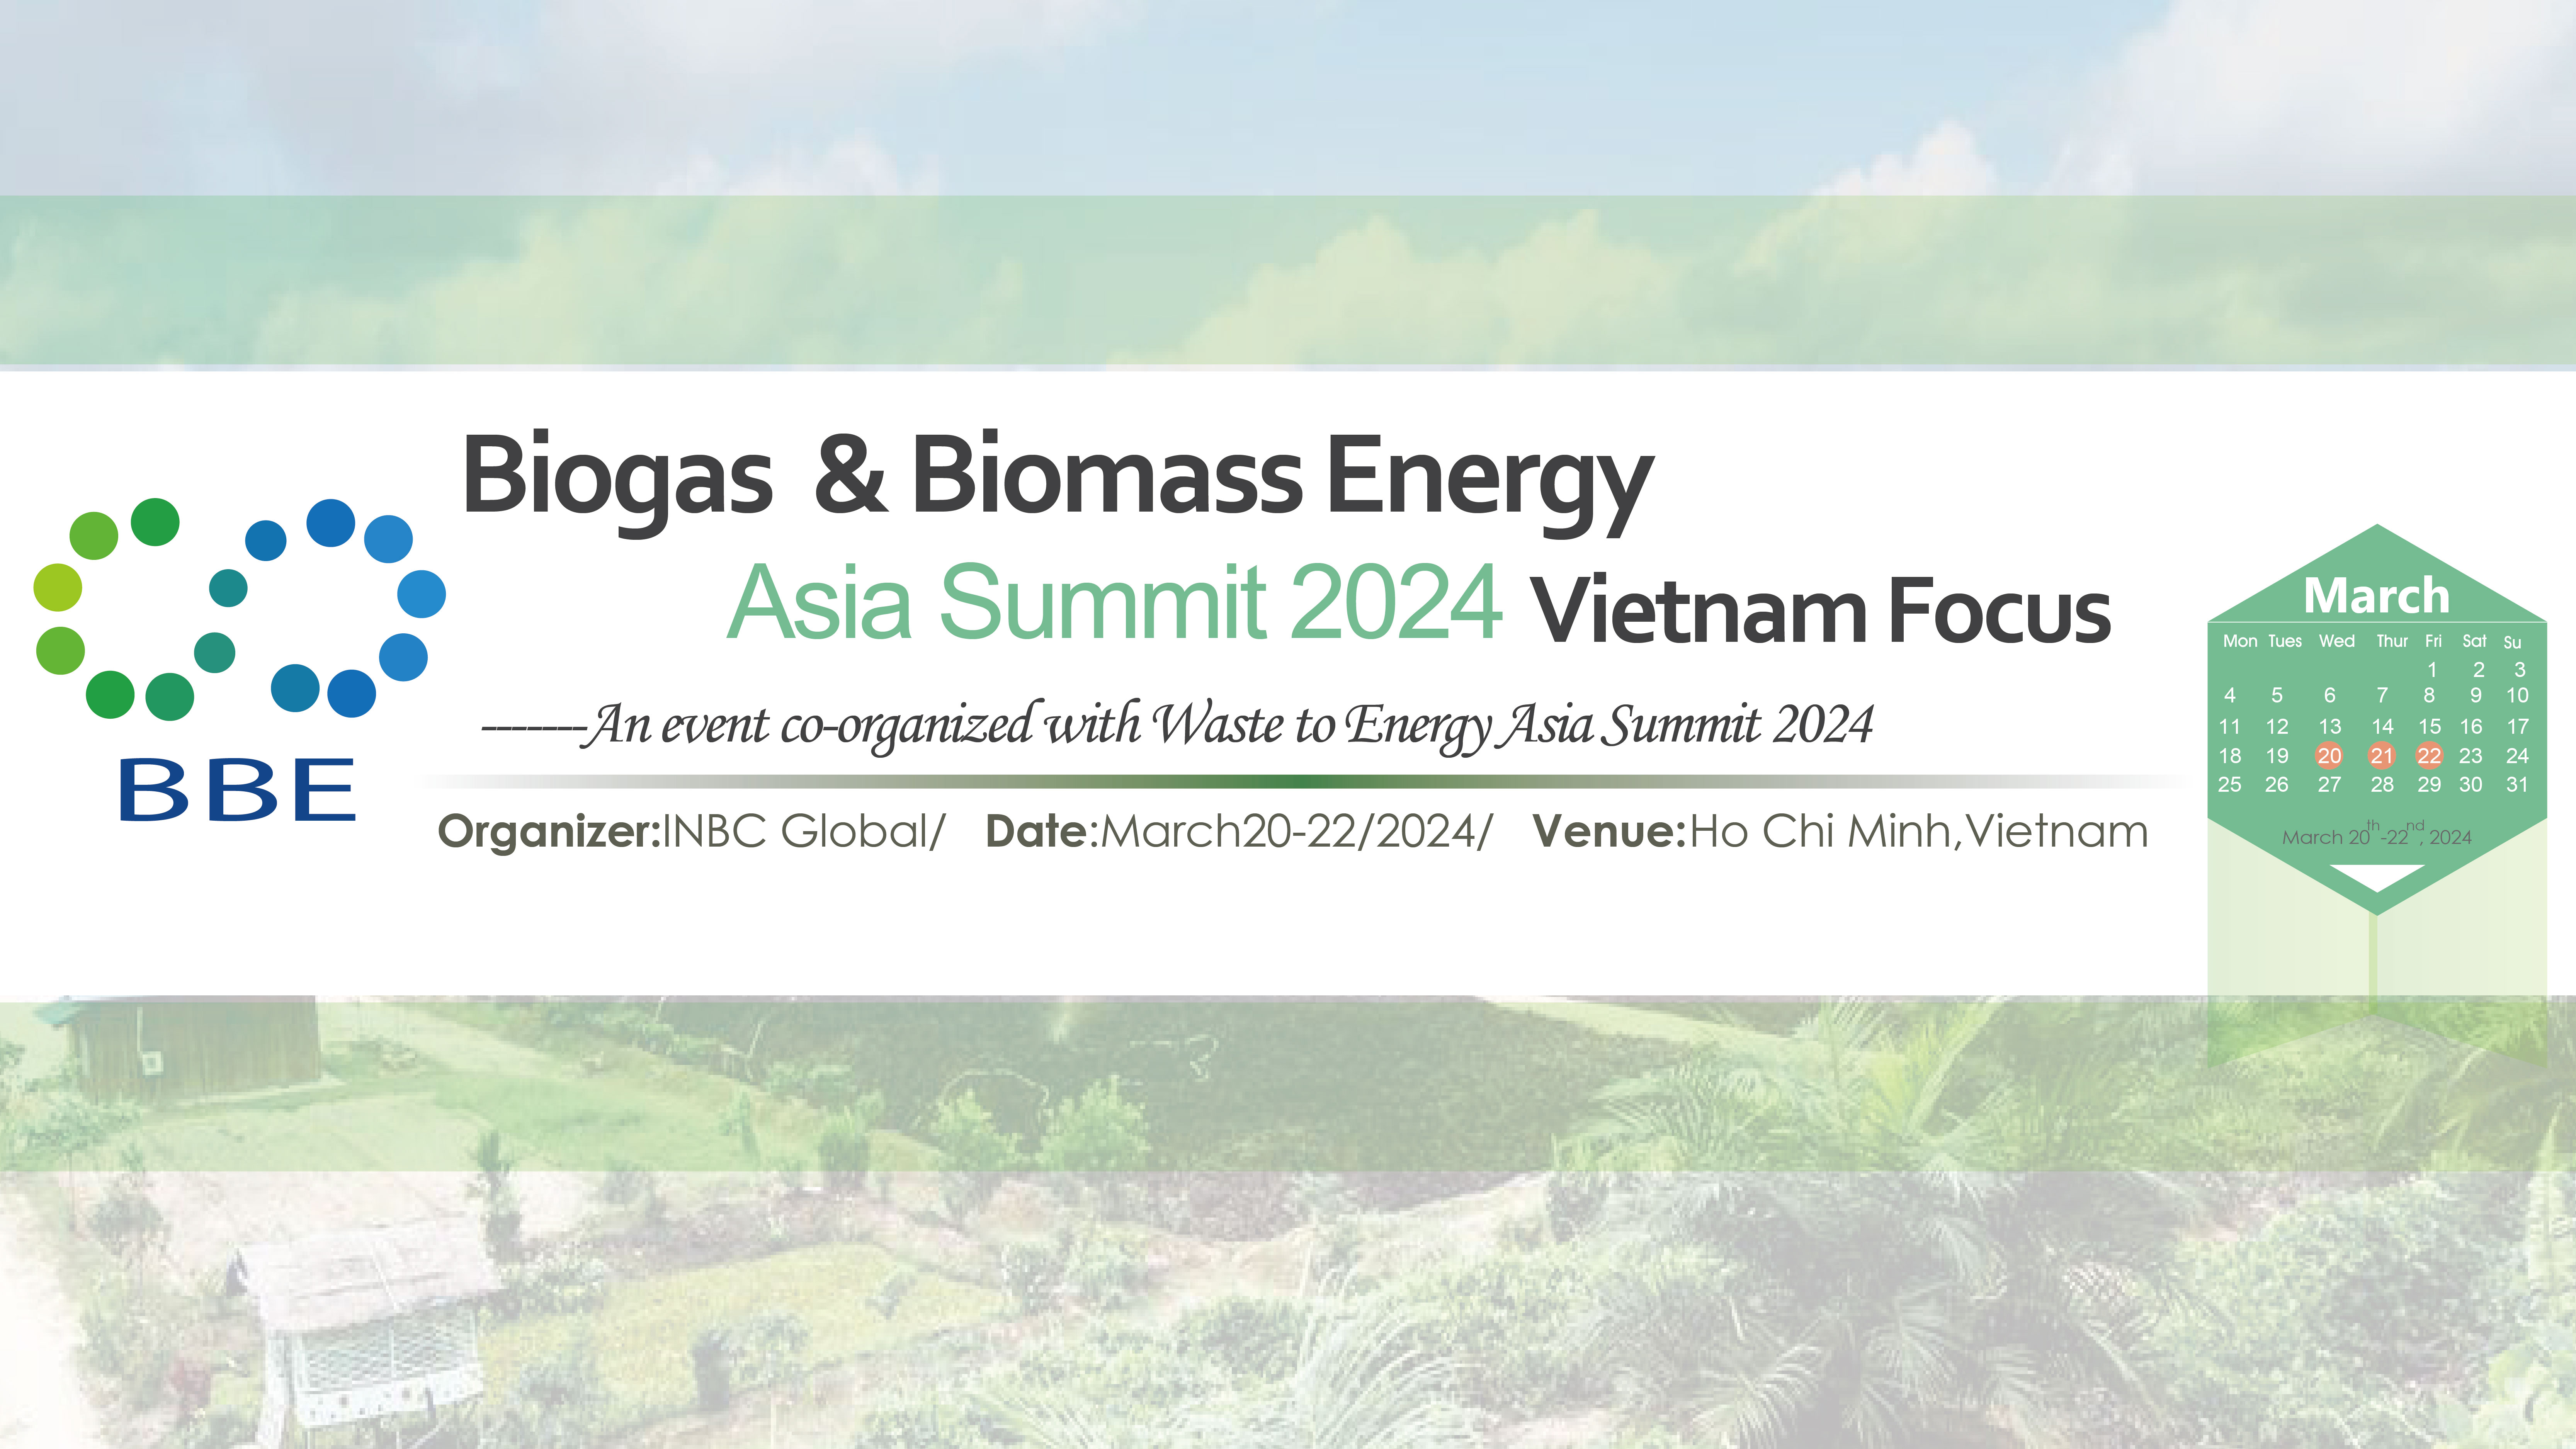 Biogas & Biomass Energy Asia Summit 2024 Vietnam Focus, Ho Chi Minh City, Ho Chi Minh, Vietnam